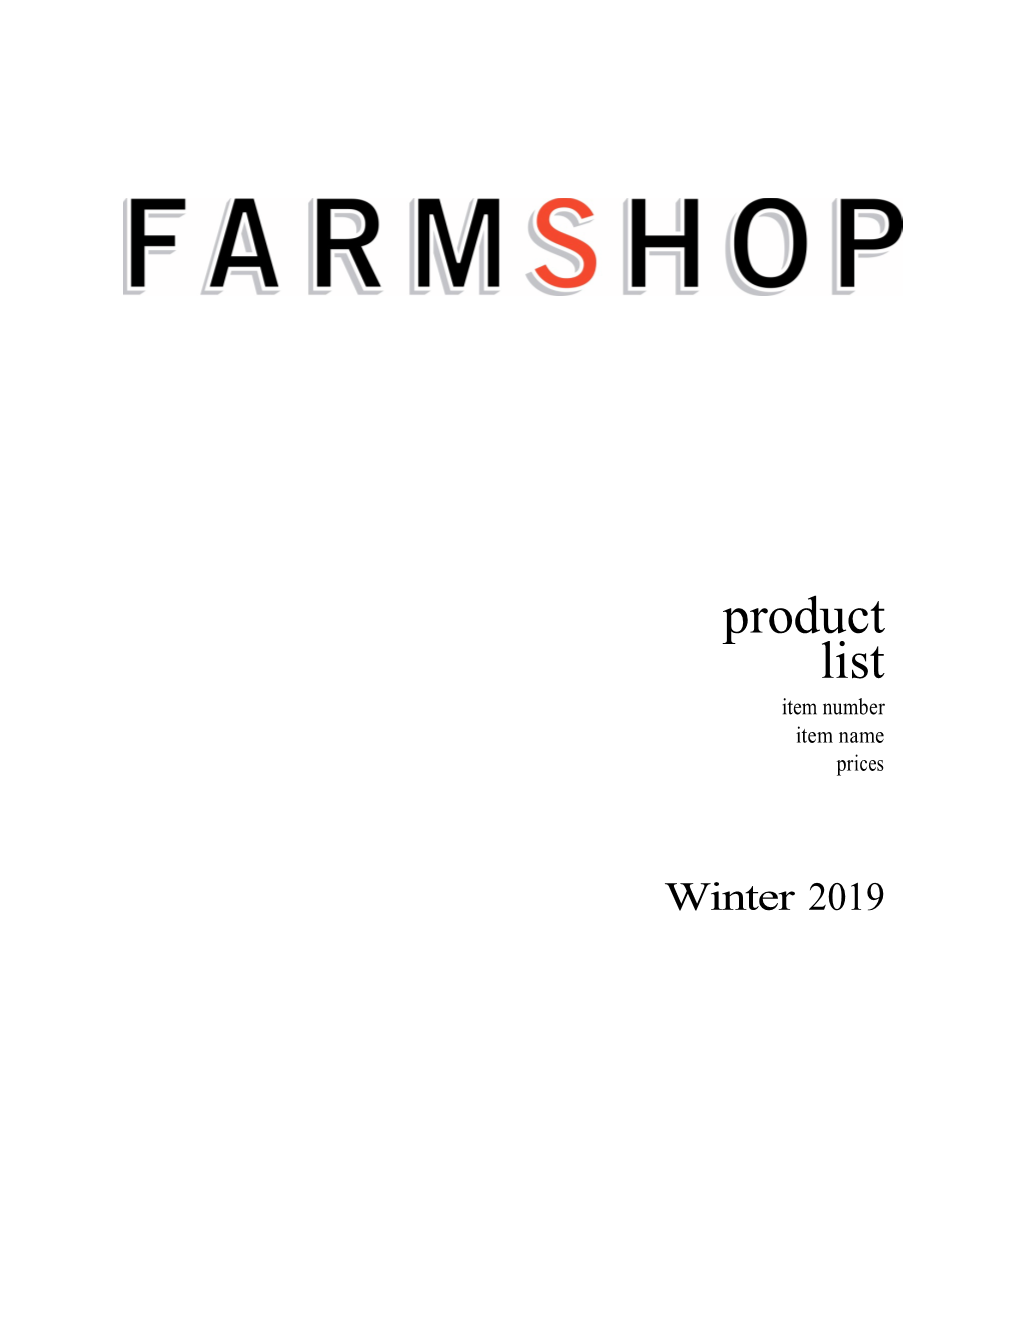 Farmshop Bakery Product List Winter 2019